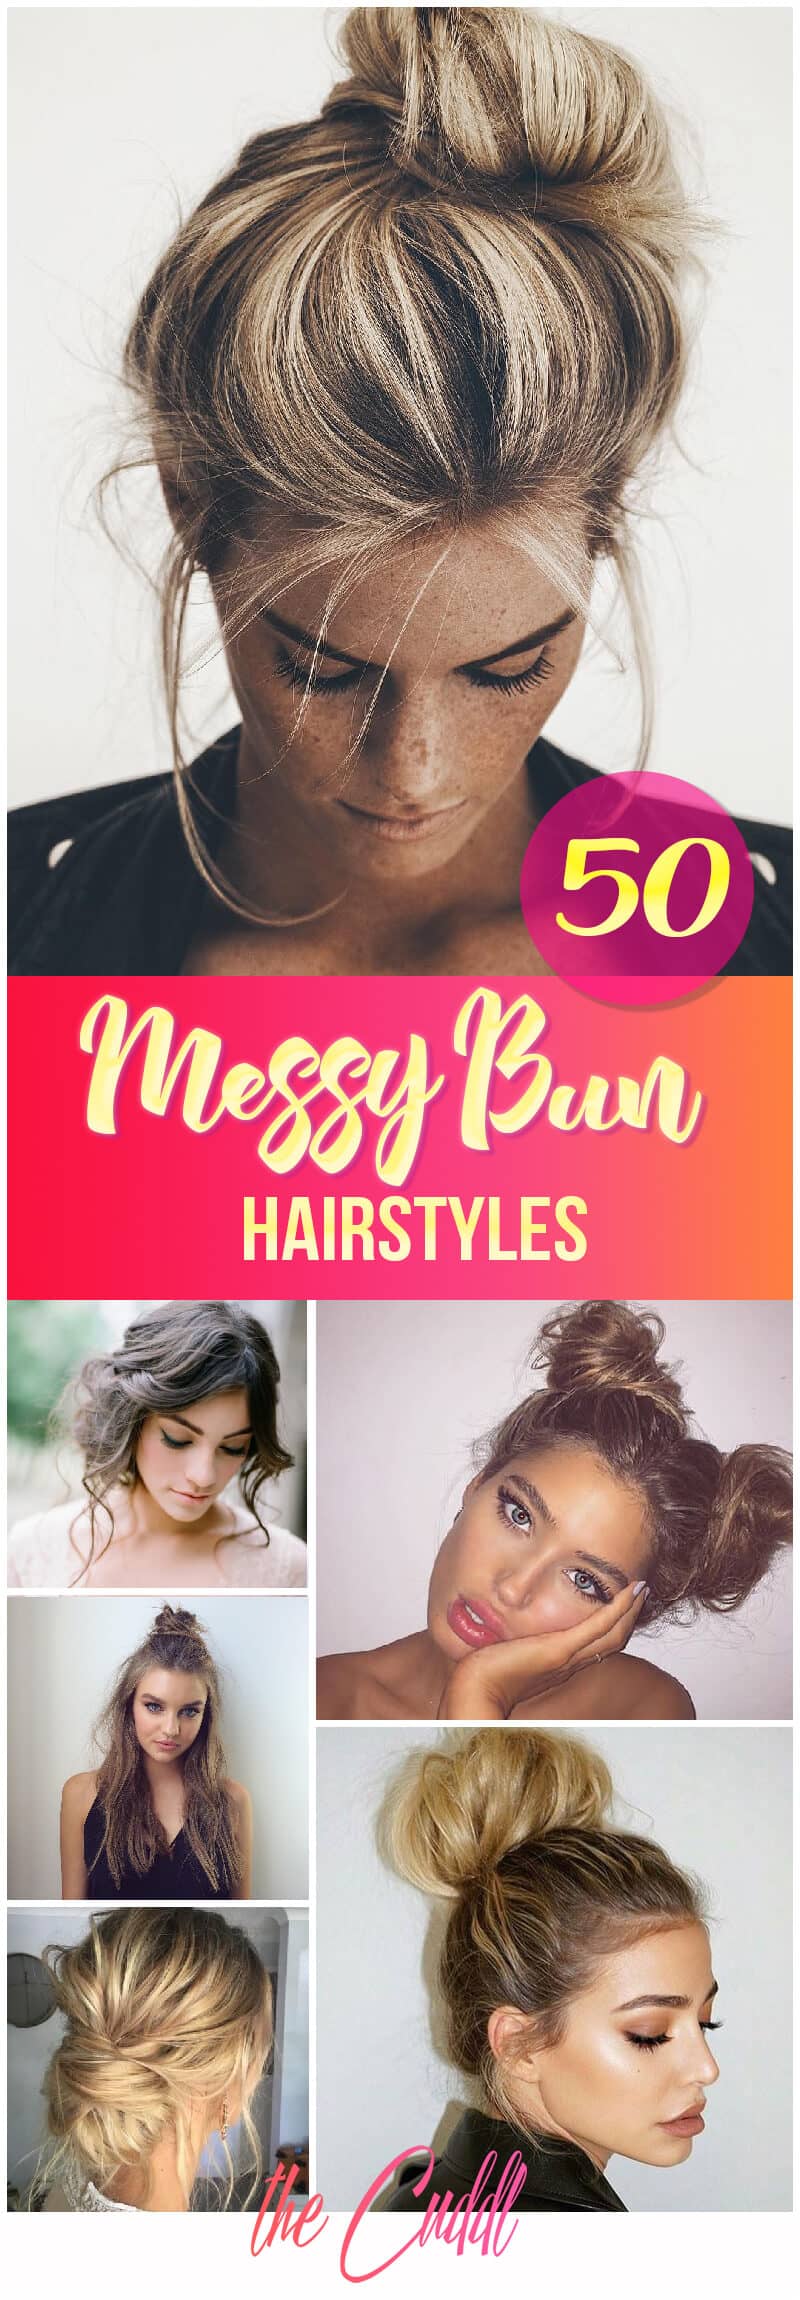 50 Chic Messy Bun Hairstyles